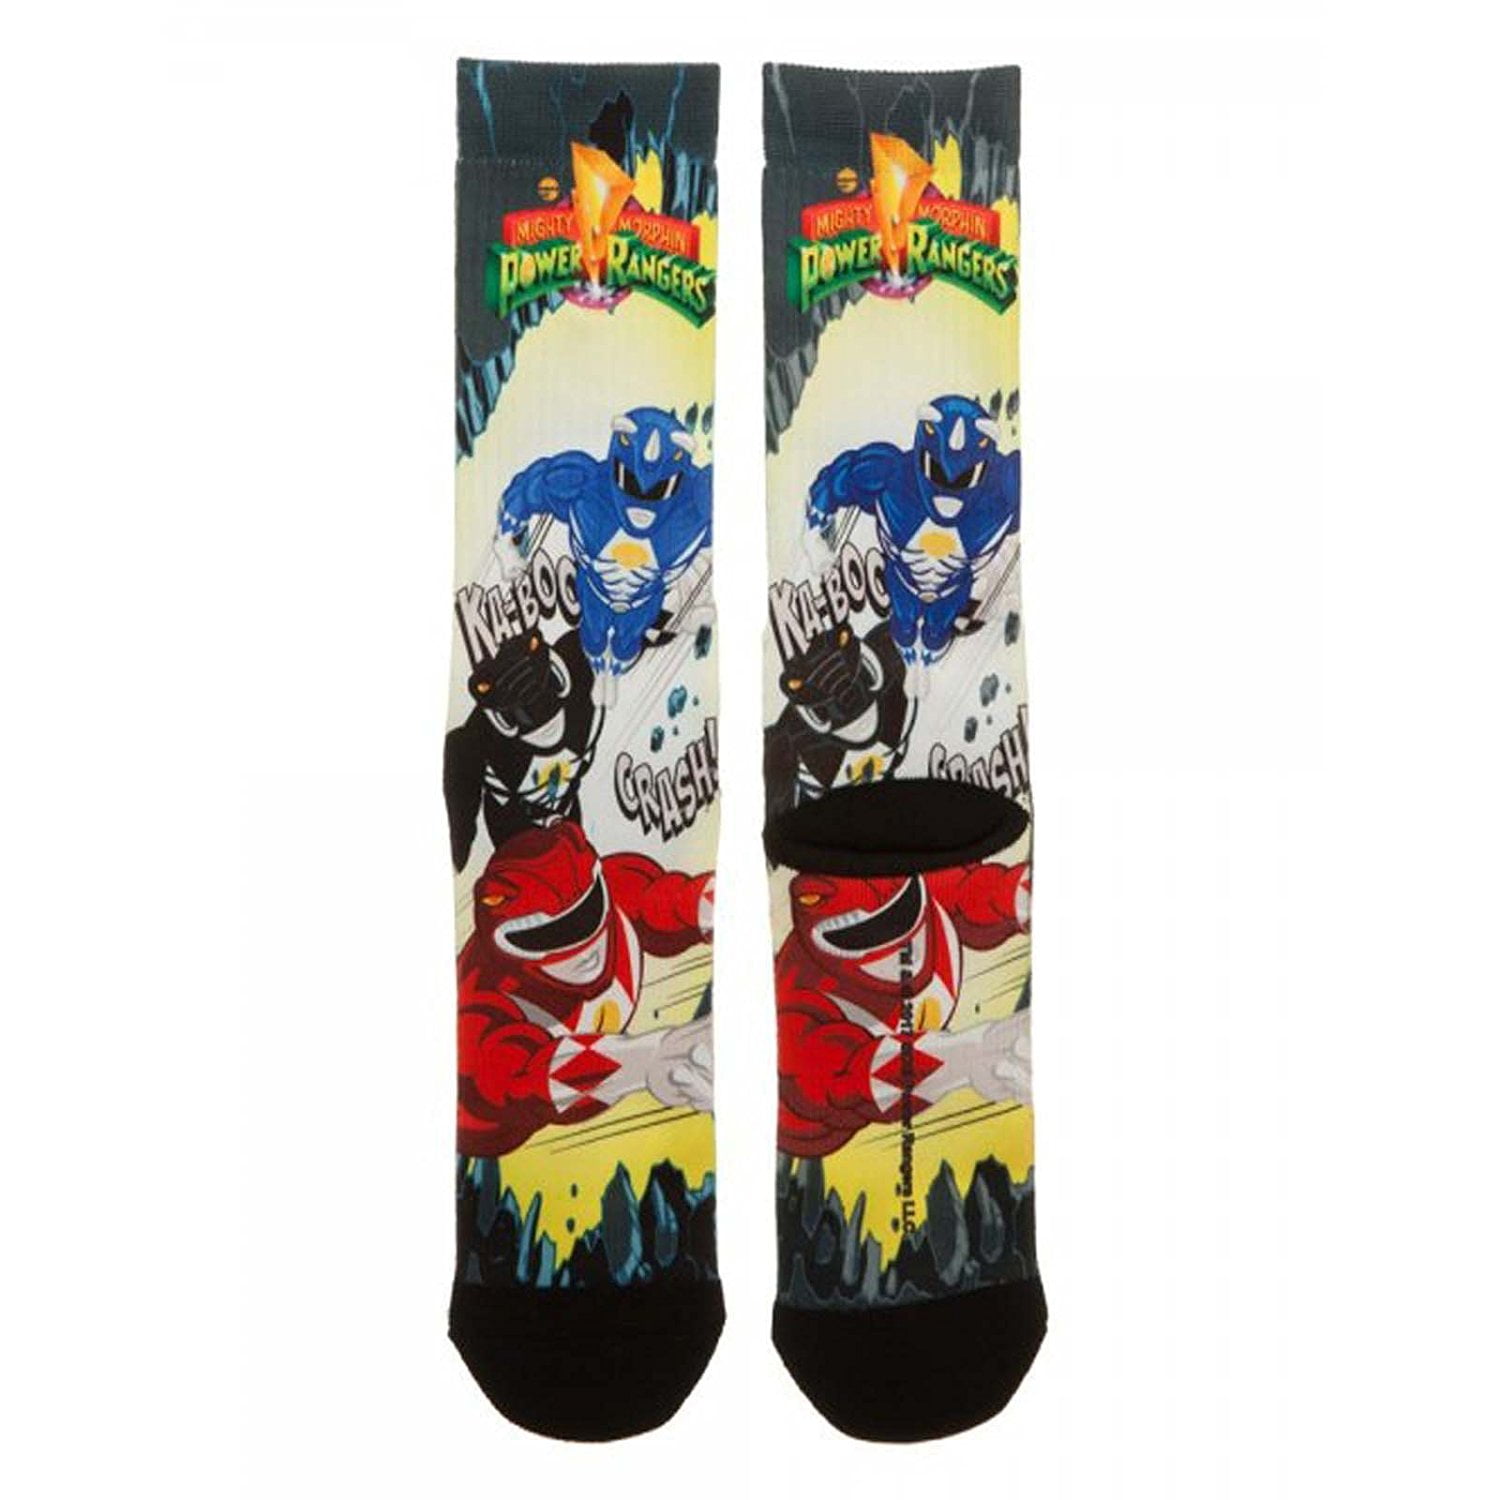 Kingdom Hearts Bioworld 3 pack socks sora mickey